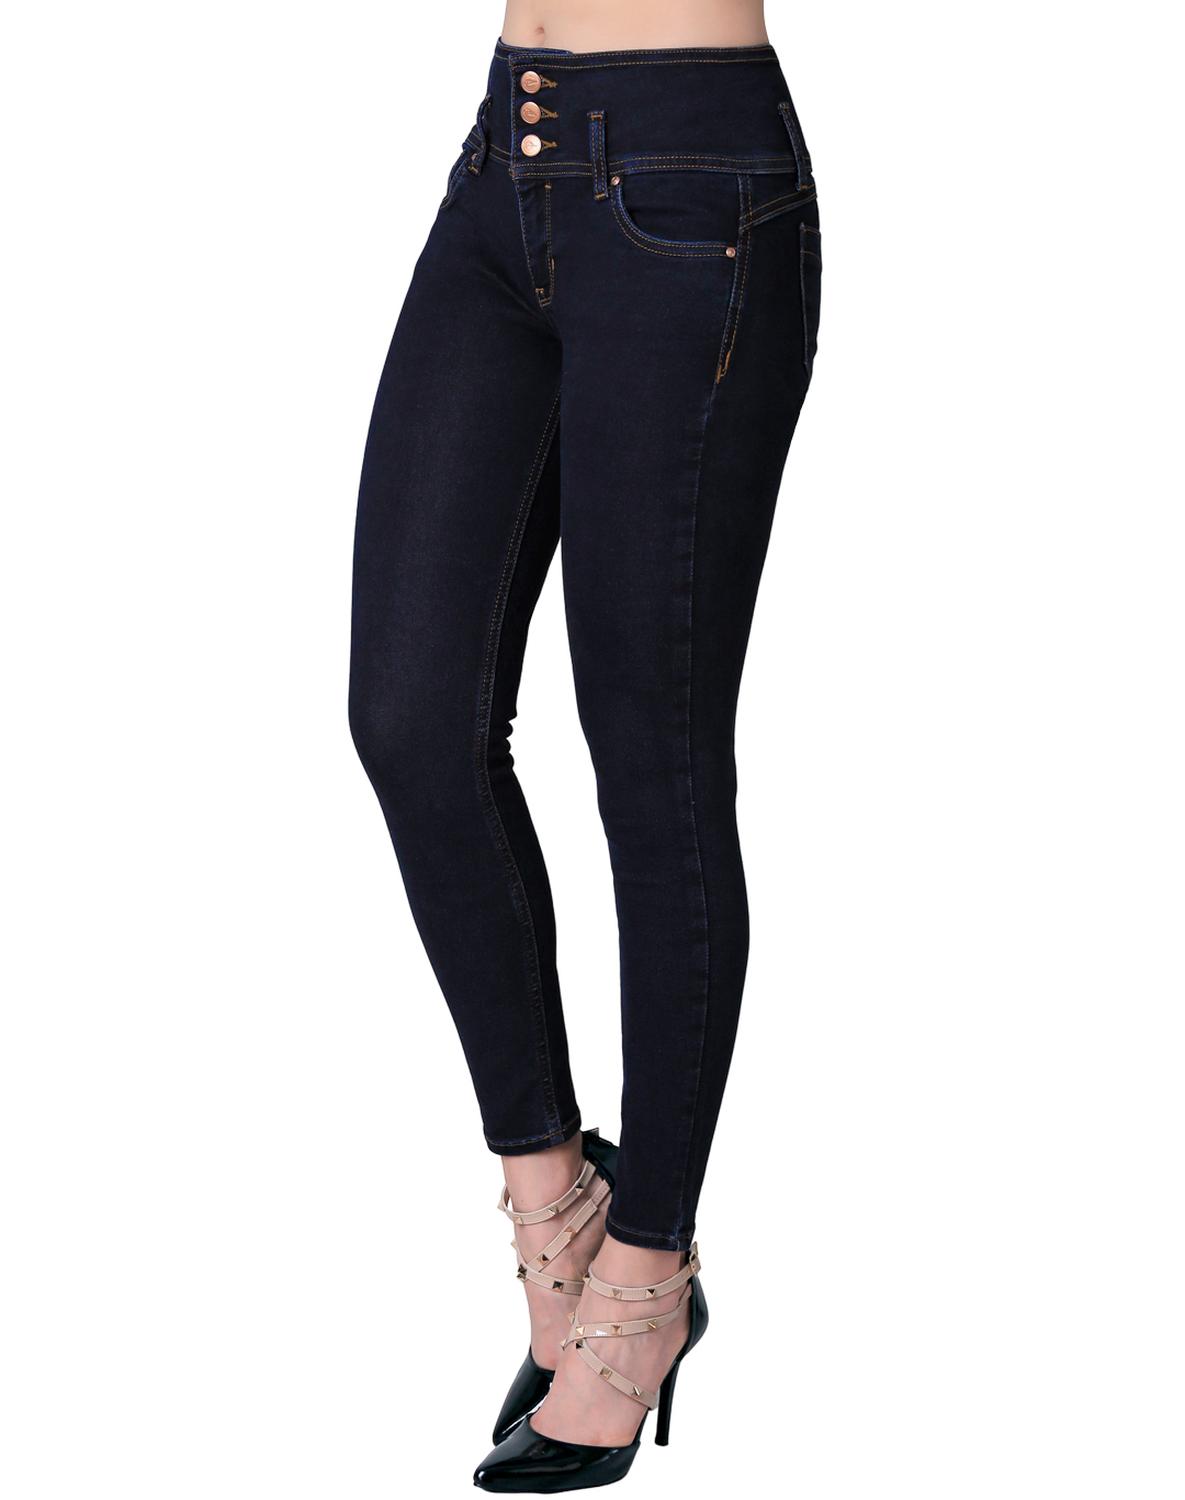 Jeans Básico Mujer Furor Stone 62105008 Mezclilla Stretch